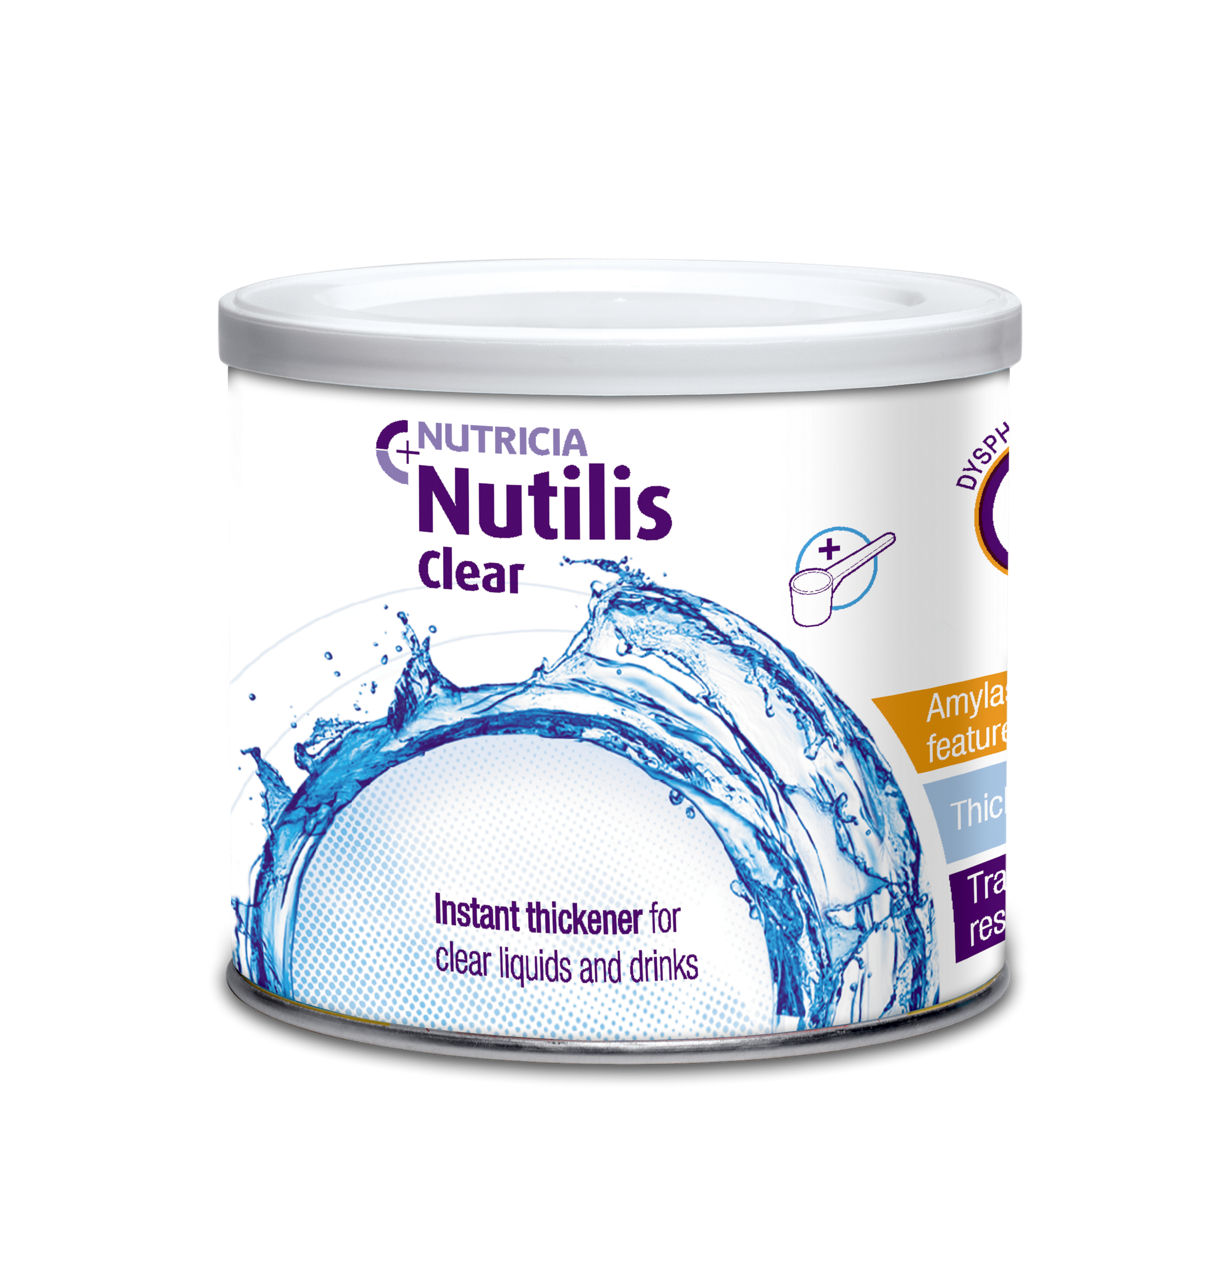 Nutilis Clear 175g tin packshot